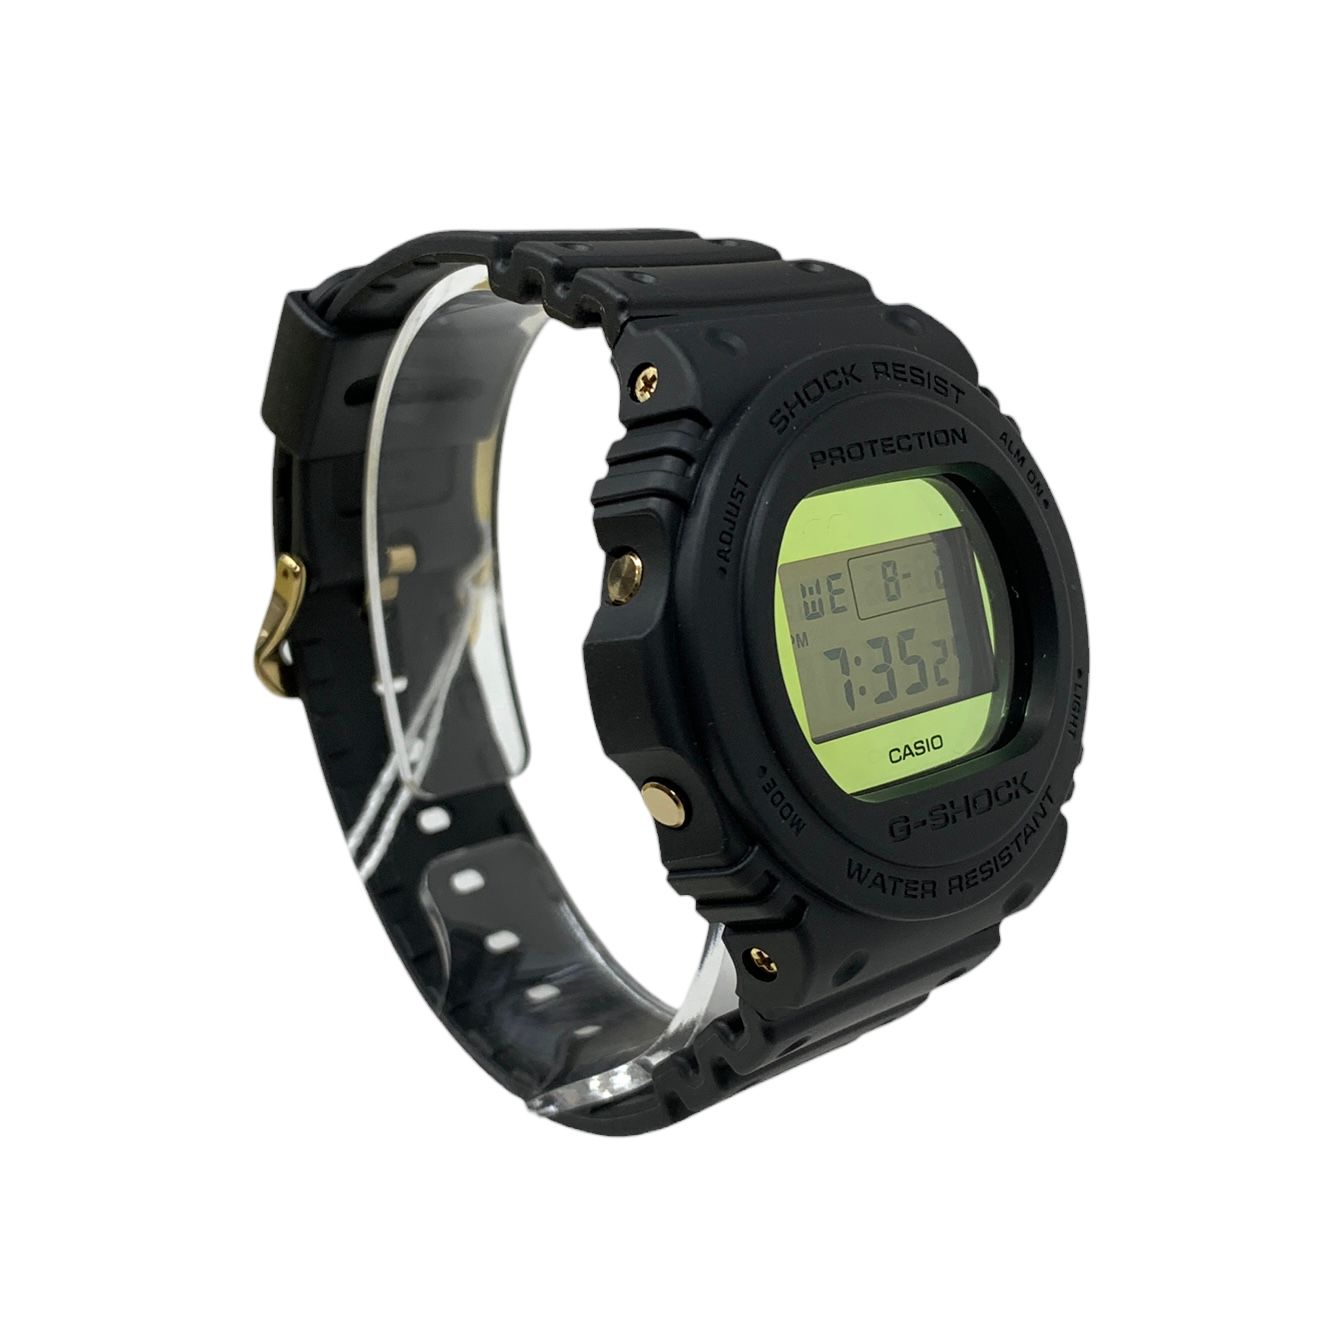 CASIO (カシオ) G-SHOCK Gショック メタリック ミラーフェイス デジタル腕時計 クォーツ 35周年 復刻  DW-5700BBMB-1DR ブラック ゴールド メンズ/025 - メルカリ